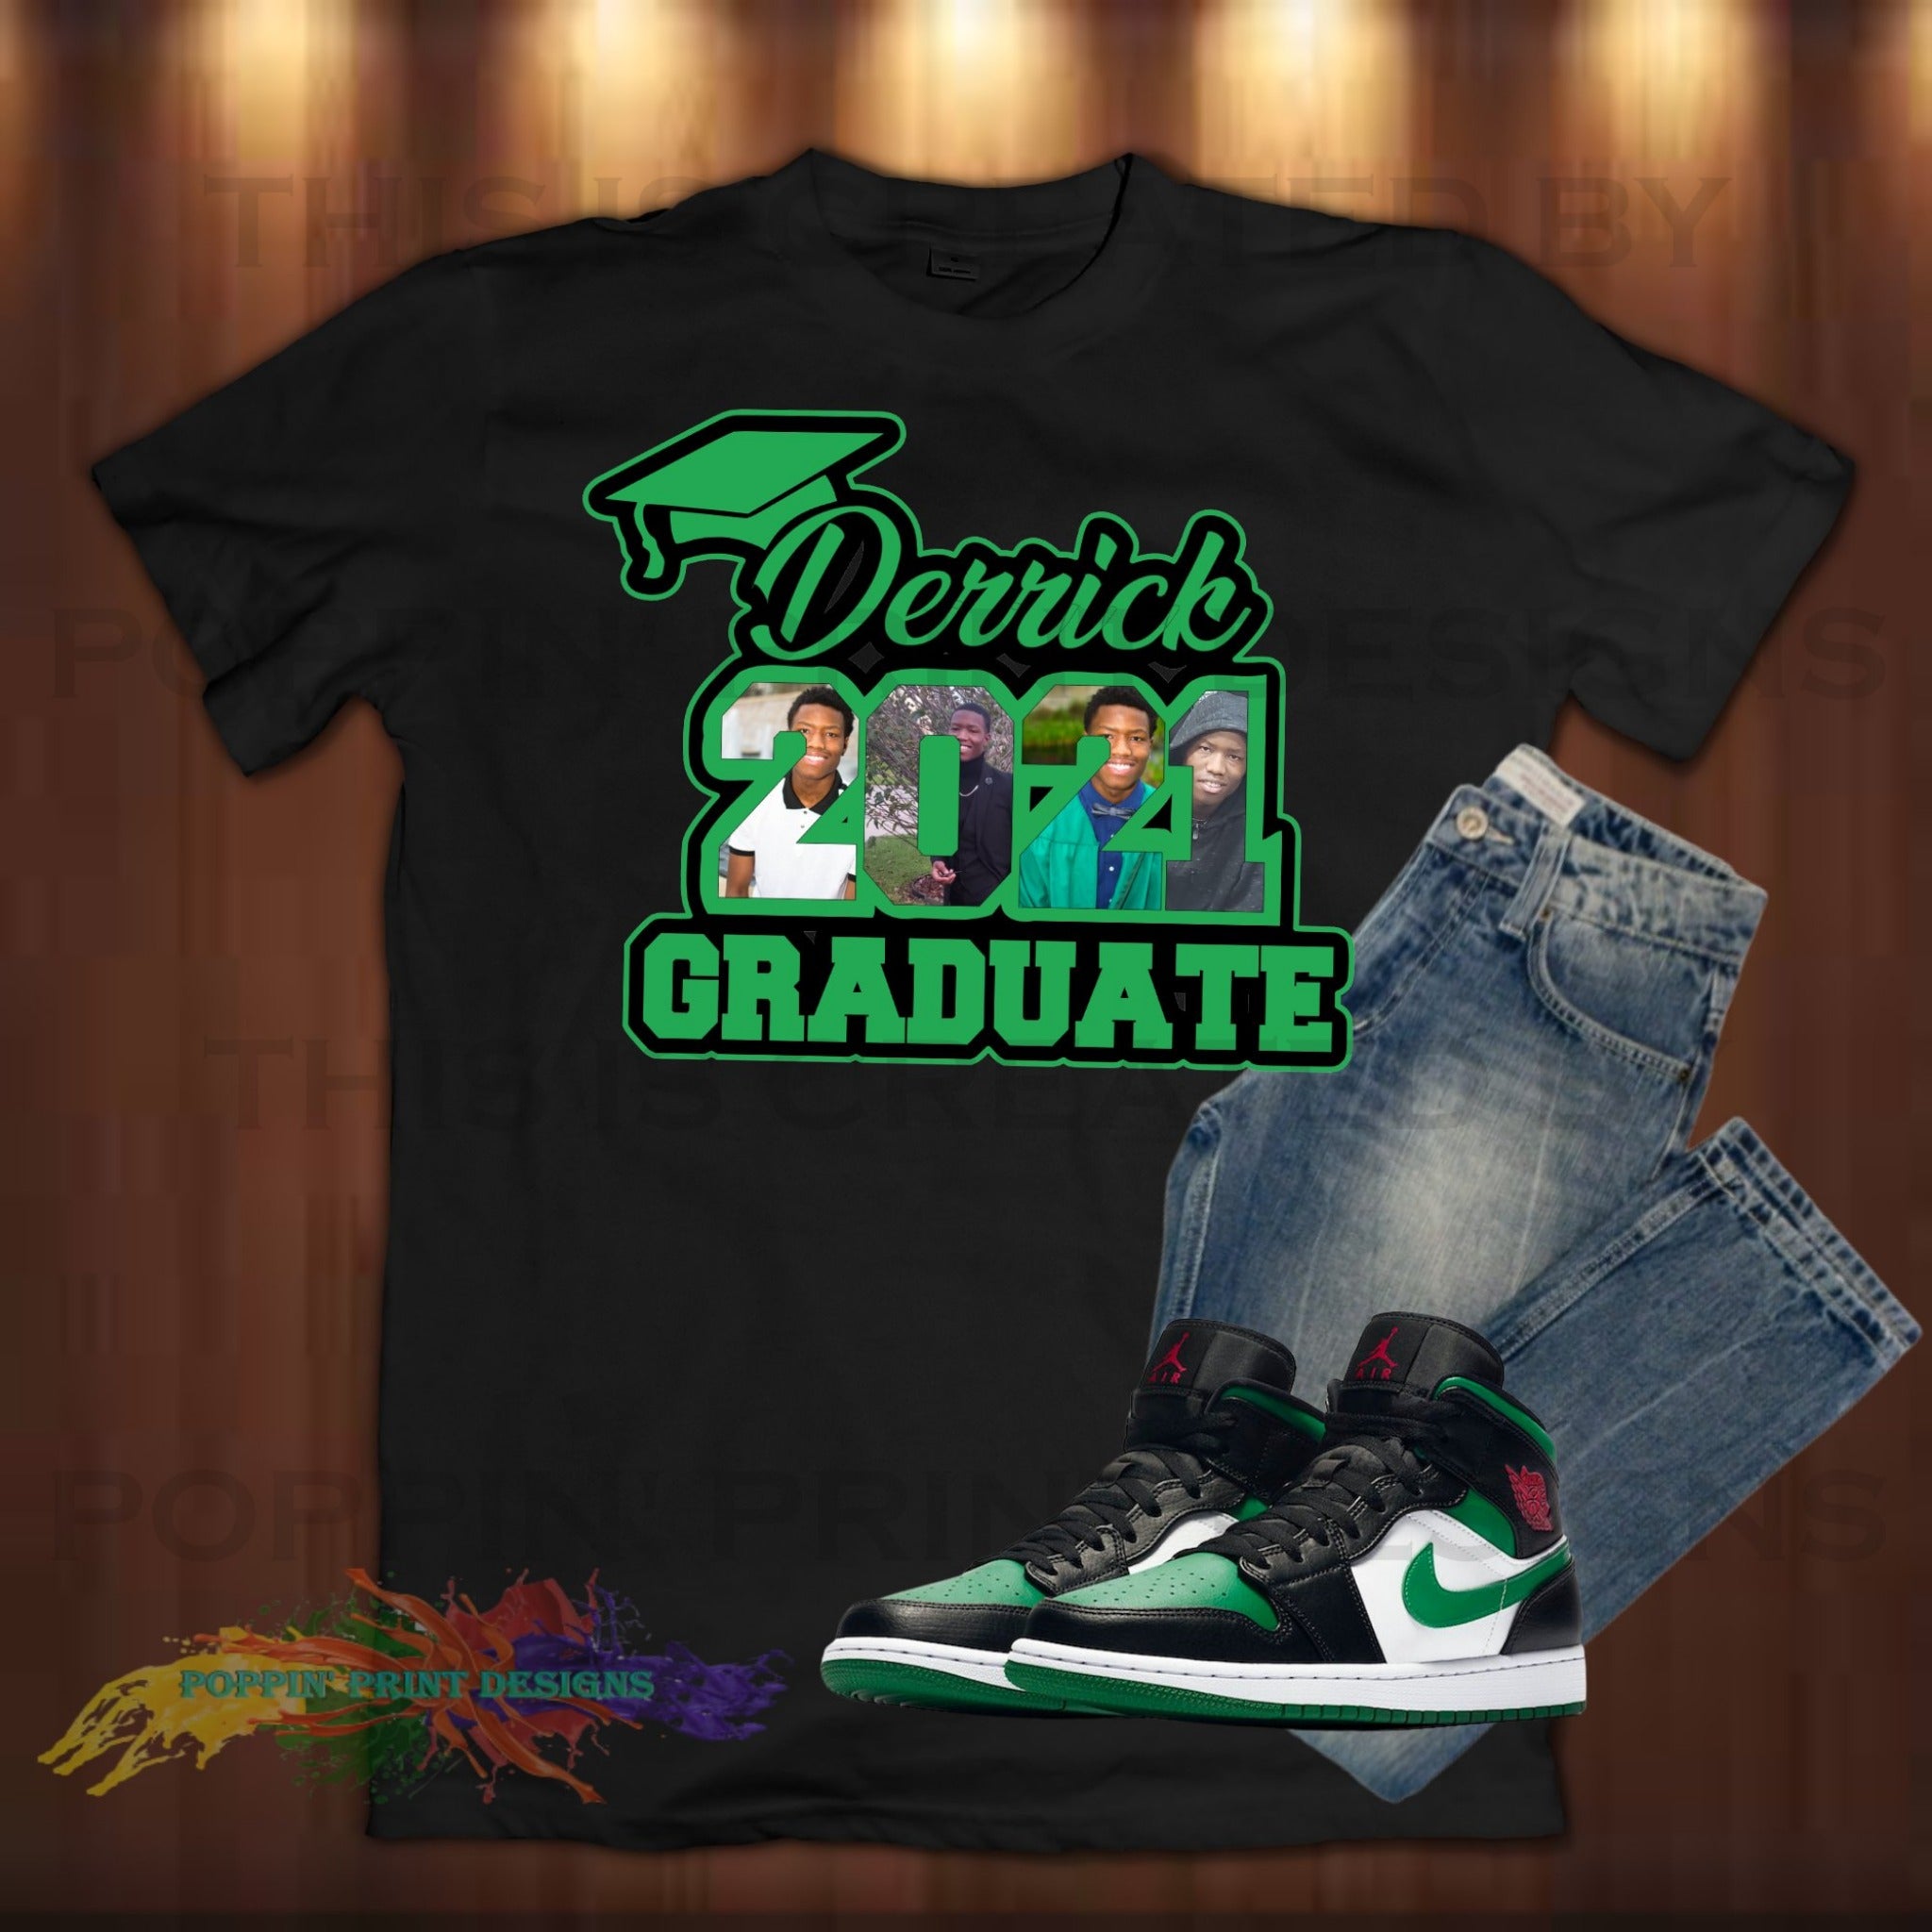 Graduate Shirts